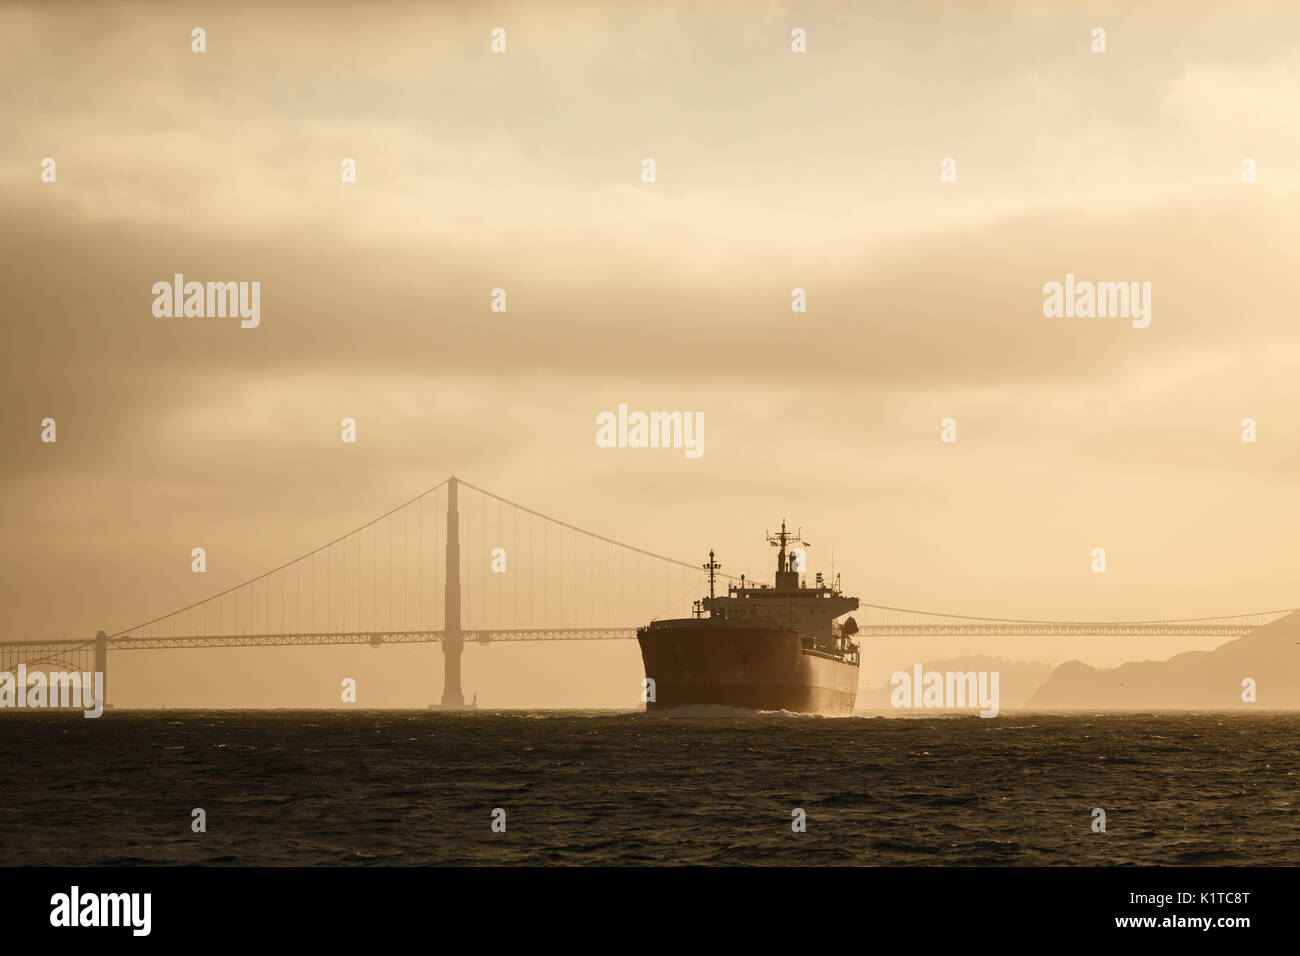 Giant tanker ship and golden gate bridge at sunset Stock Photo